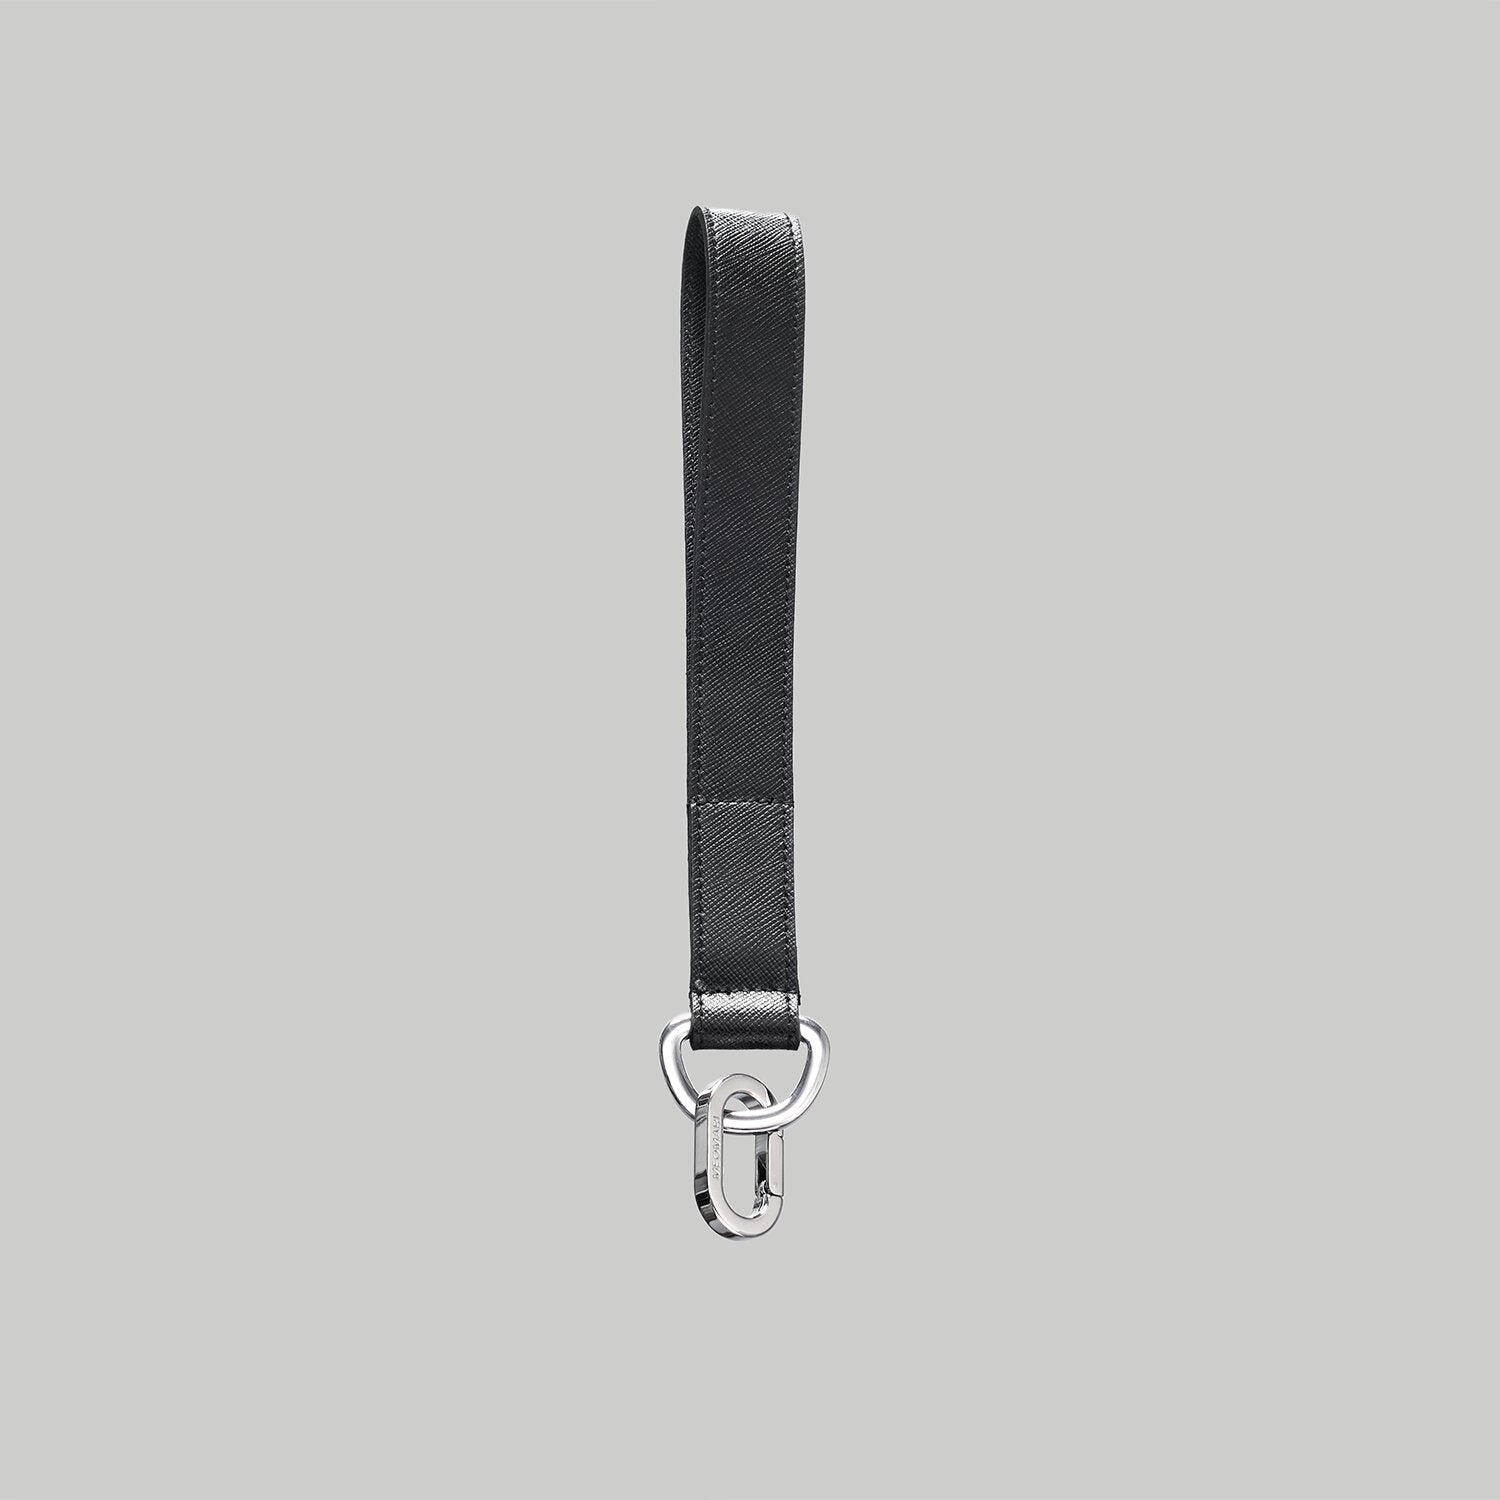 Luxury dog leash handle in black Saffiano leather with Palladium